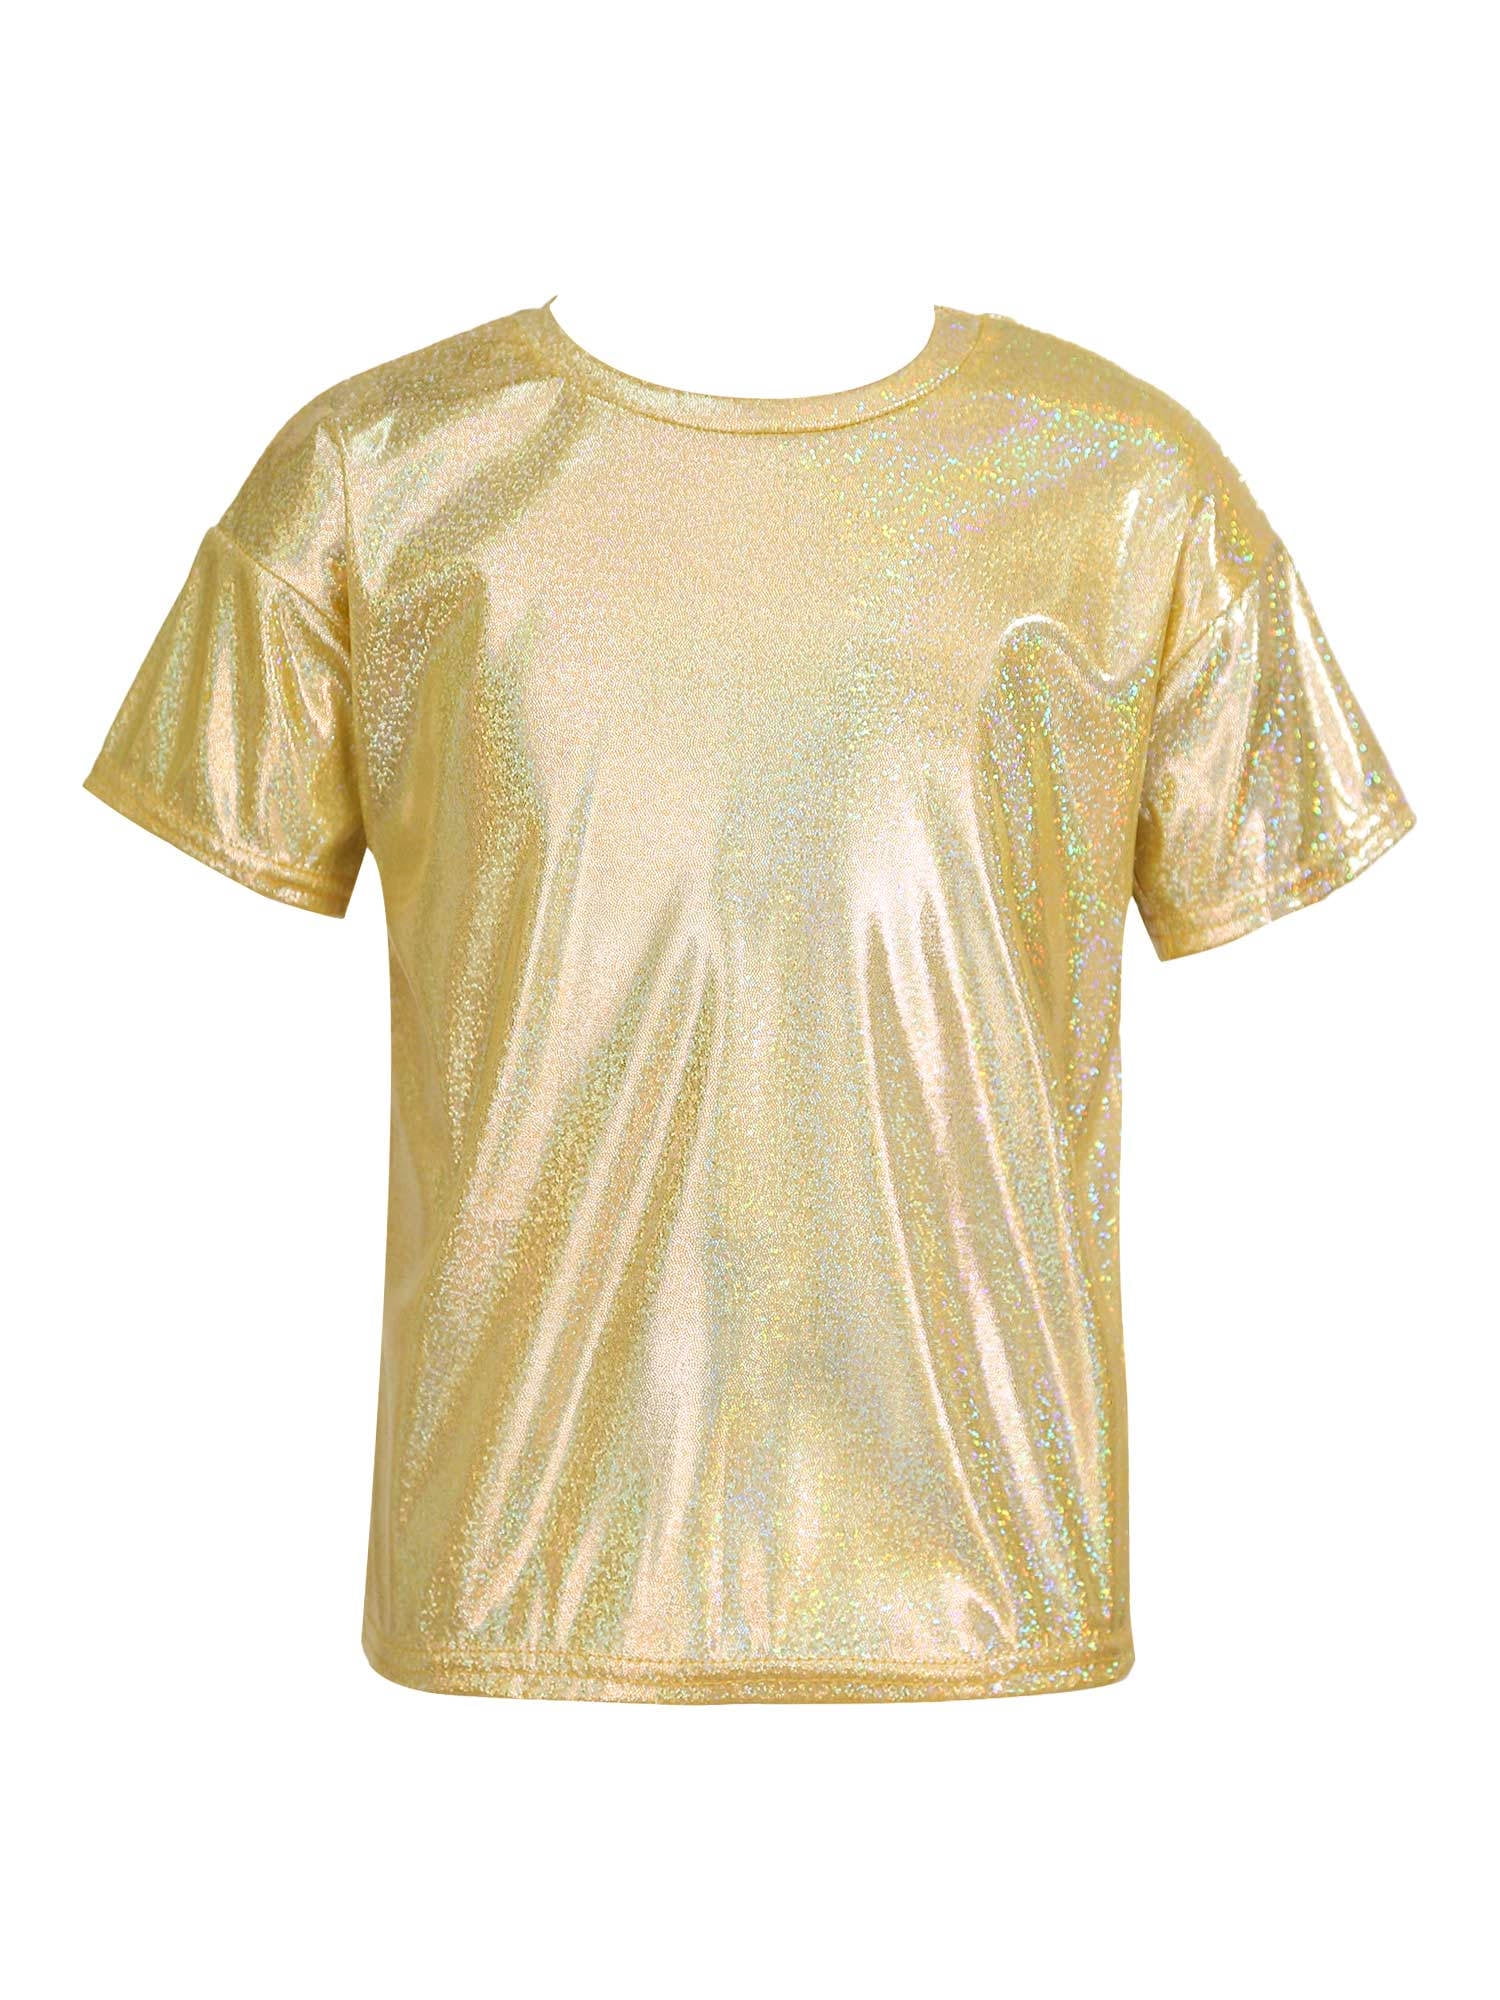 YEAHDOR Kids Girls Metallic Sequins T-Shirt Shiny Carnival Jazz Dance ...